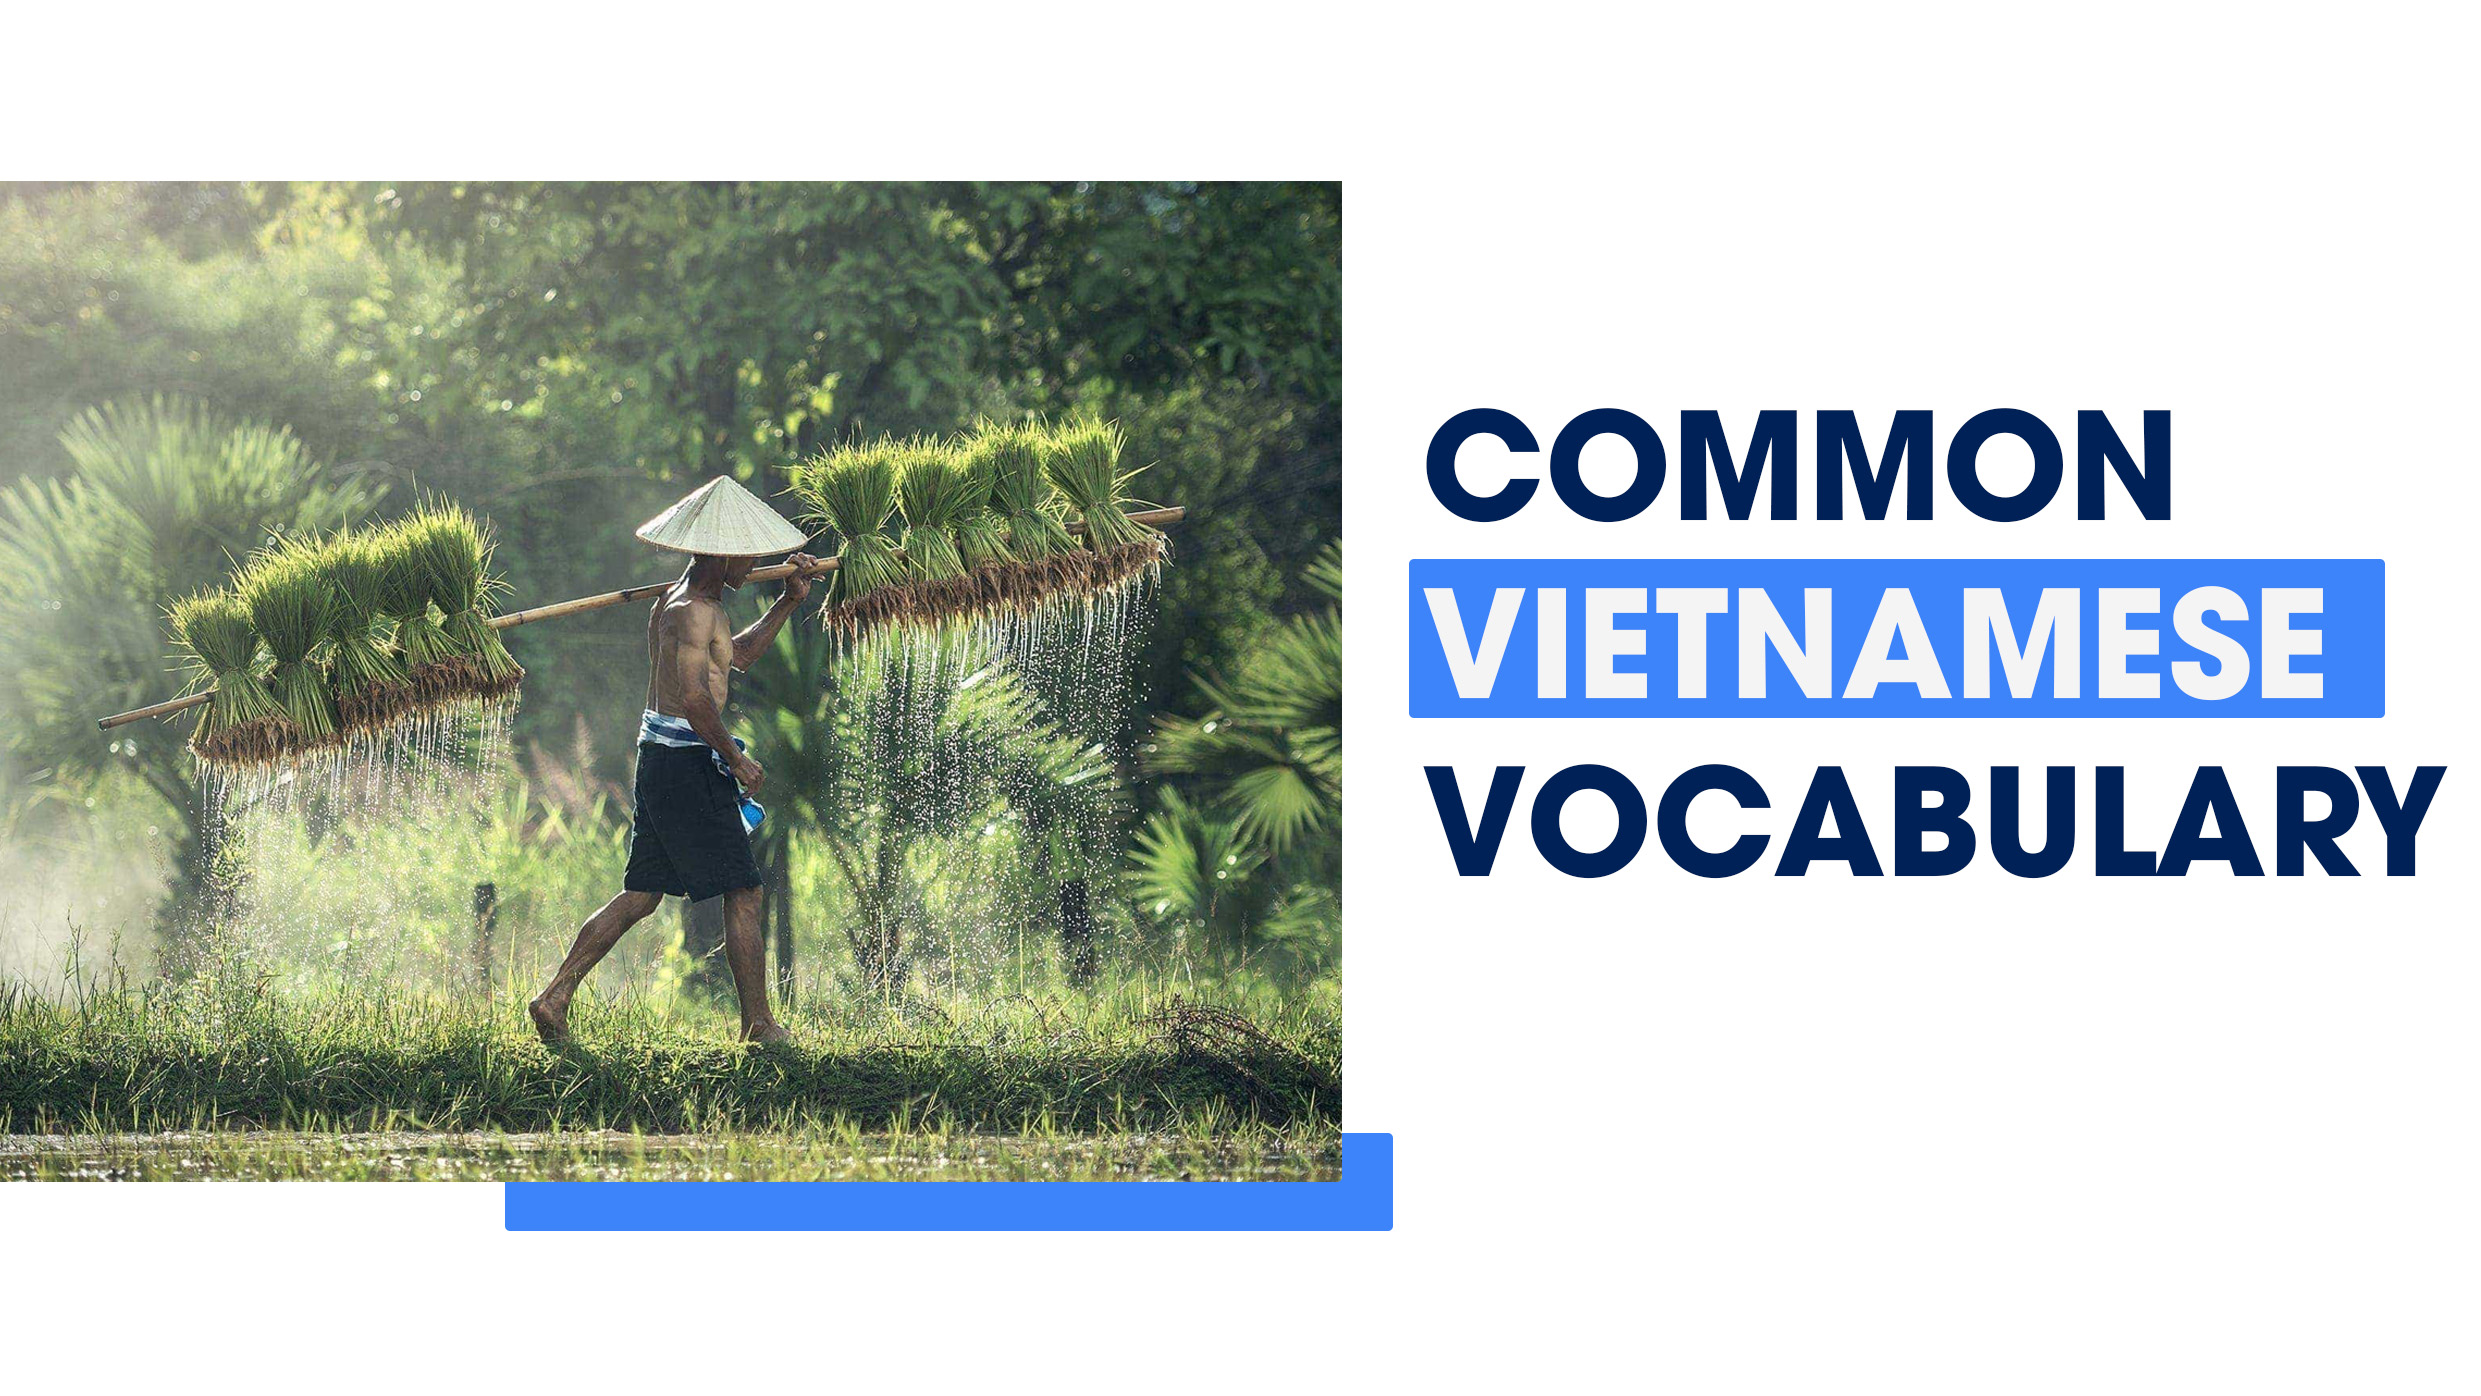 Learn to speak common Vietnamese Vocabulary